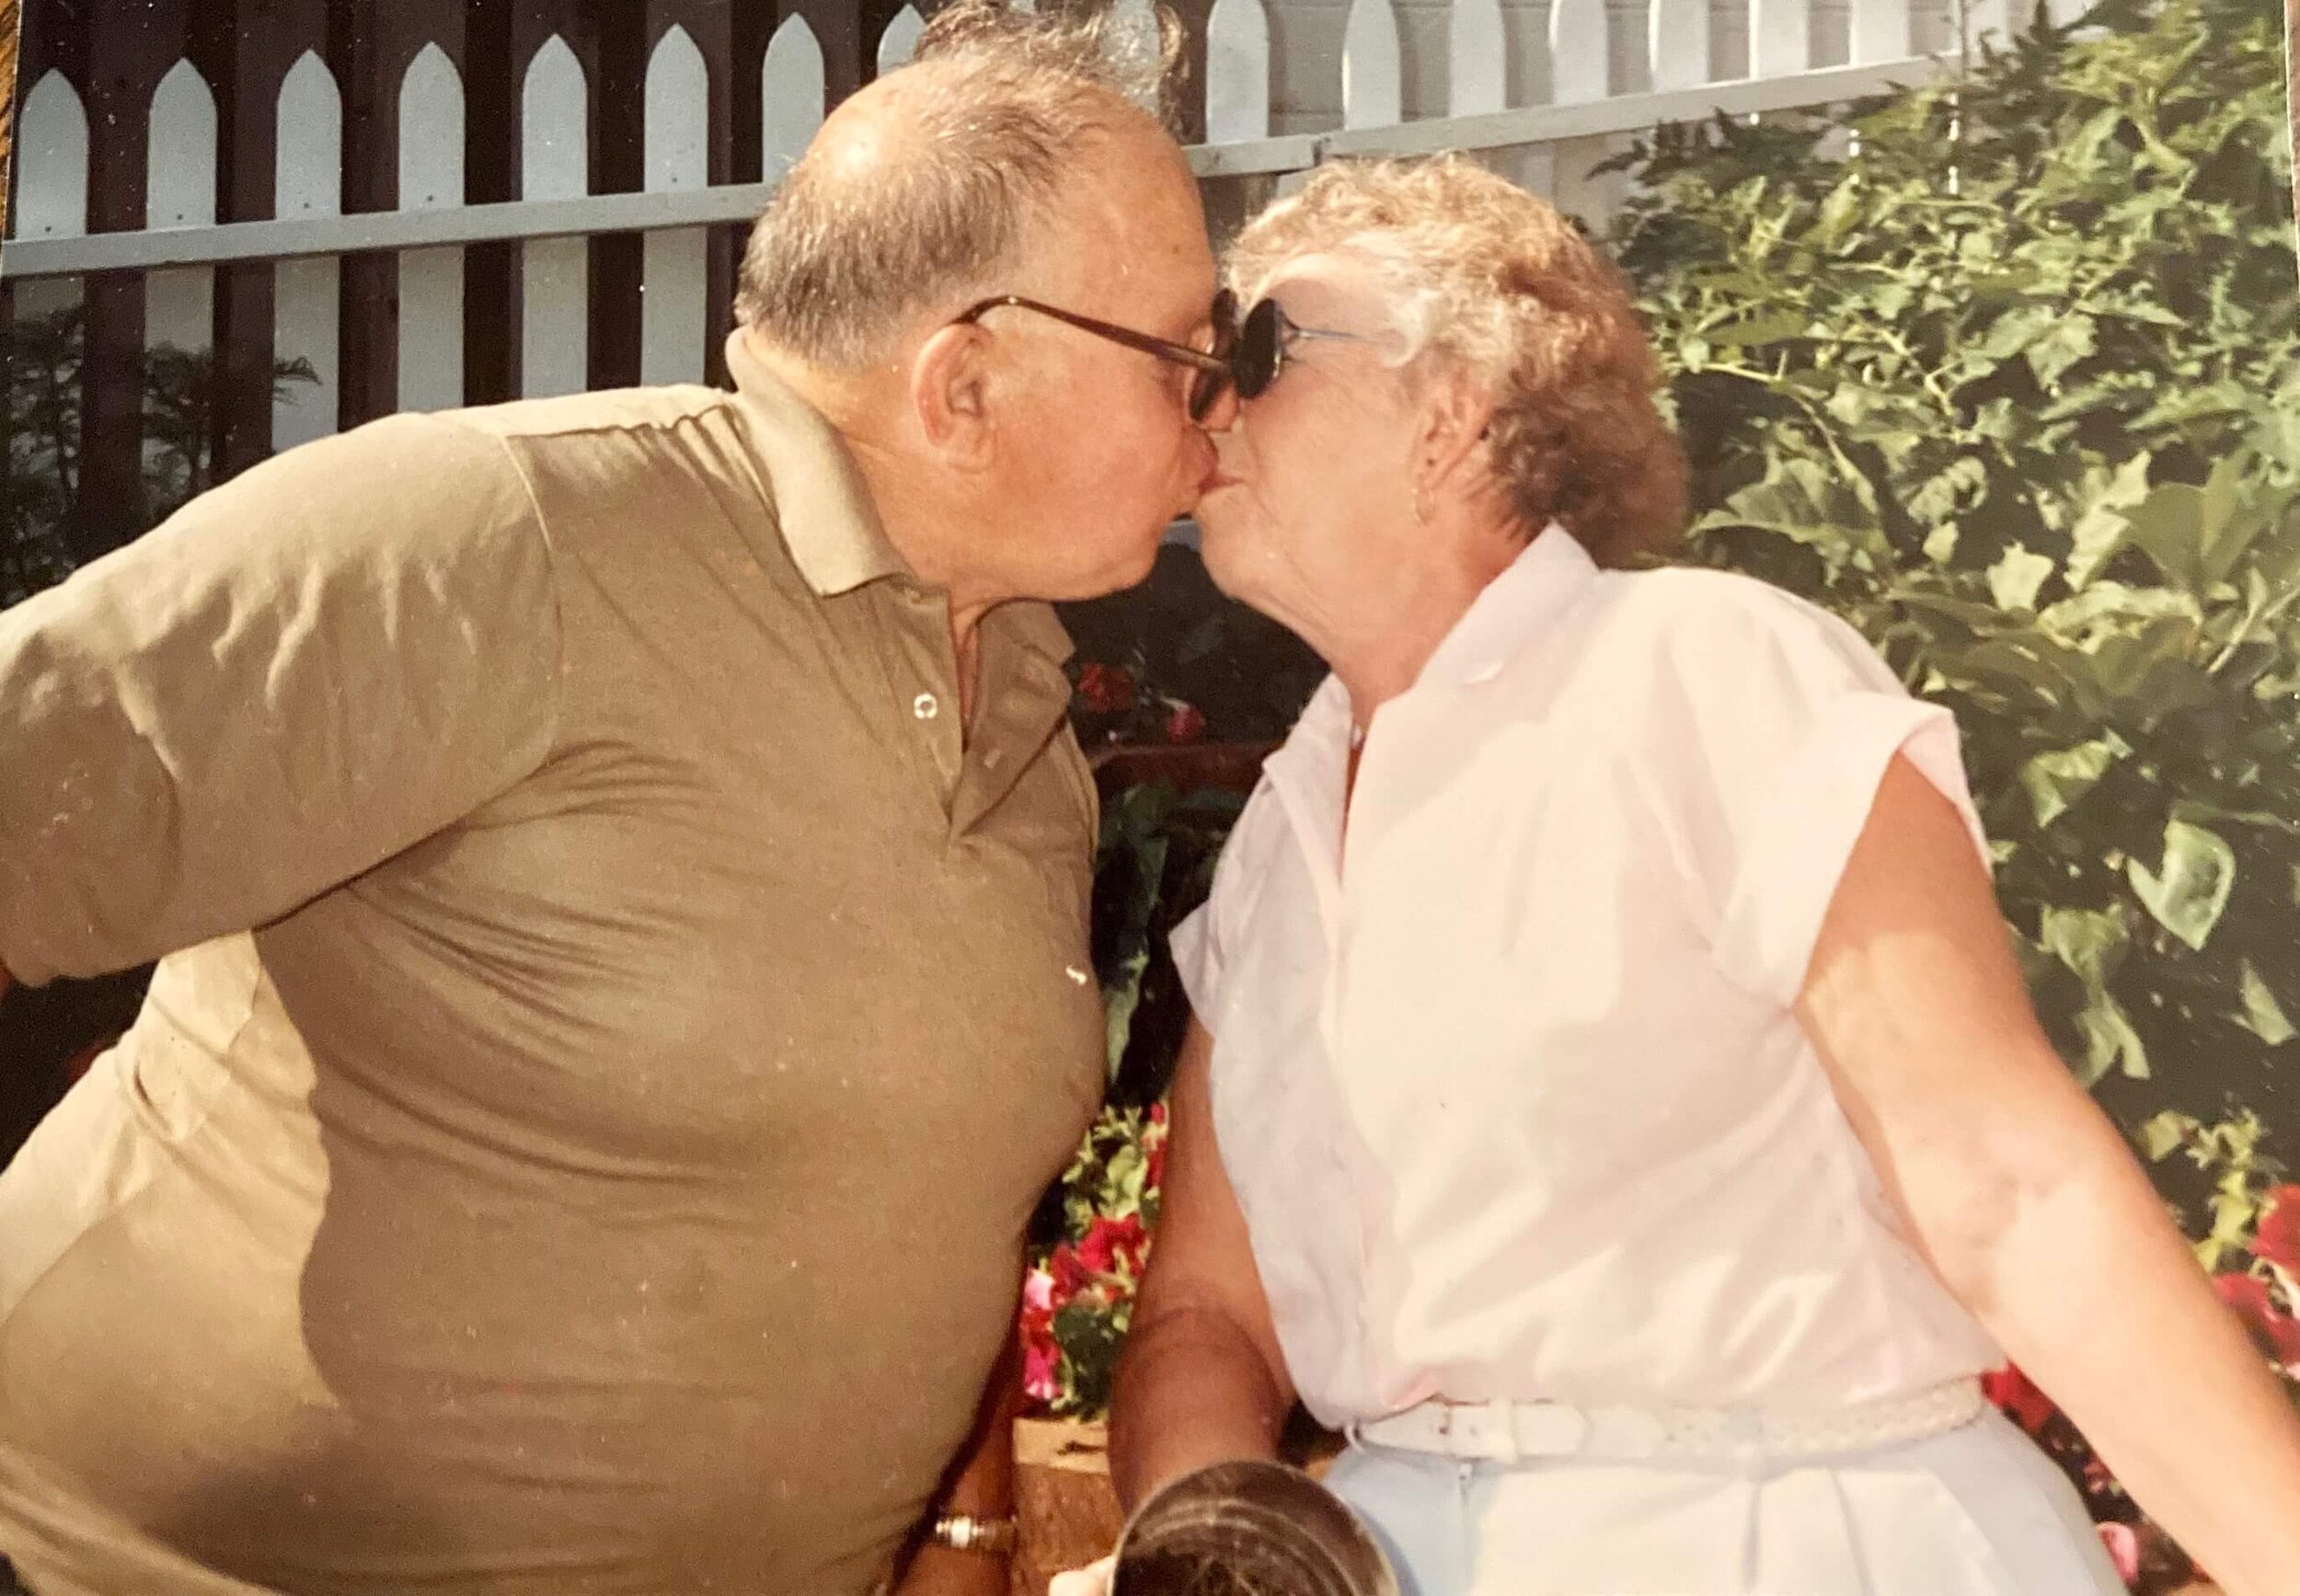 Grandma and Grandpa Kissing in the Garden.jpg